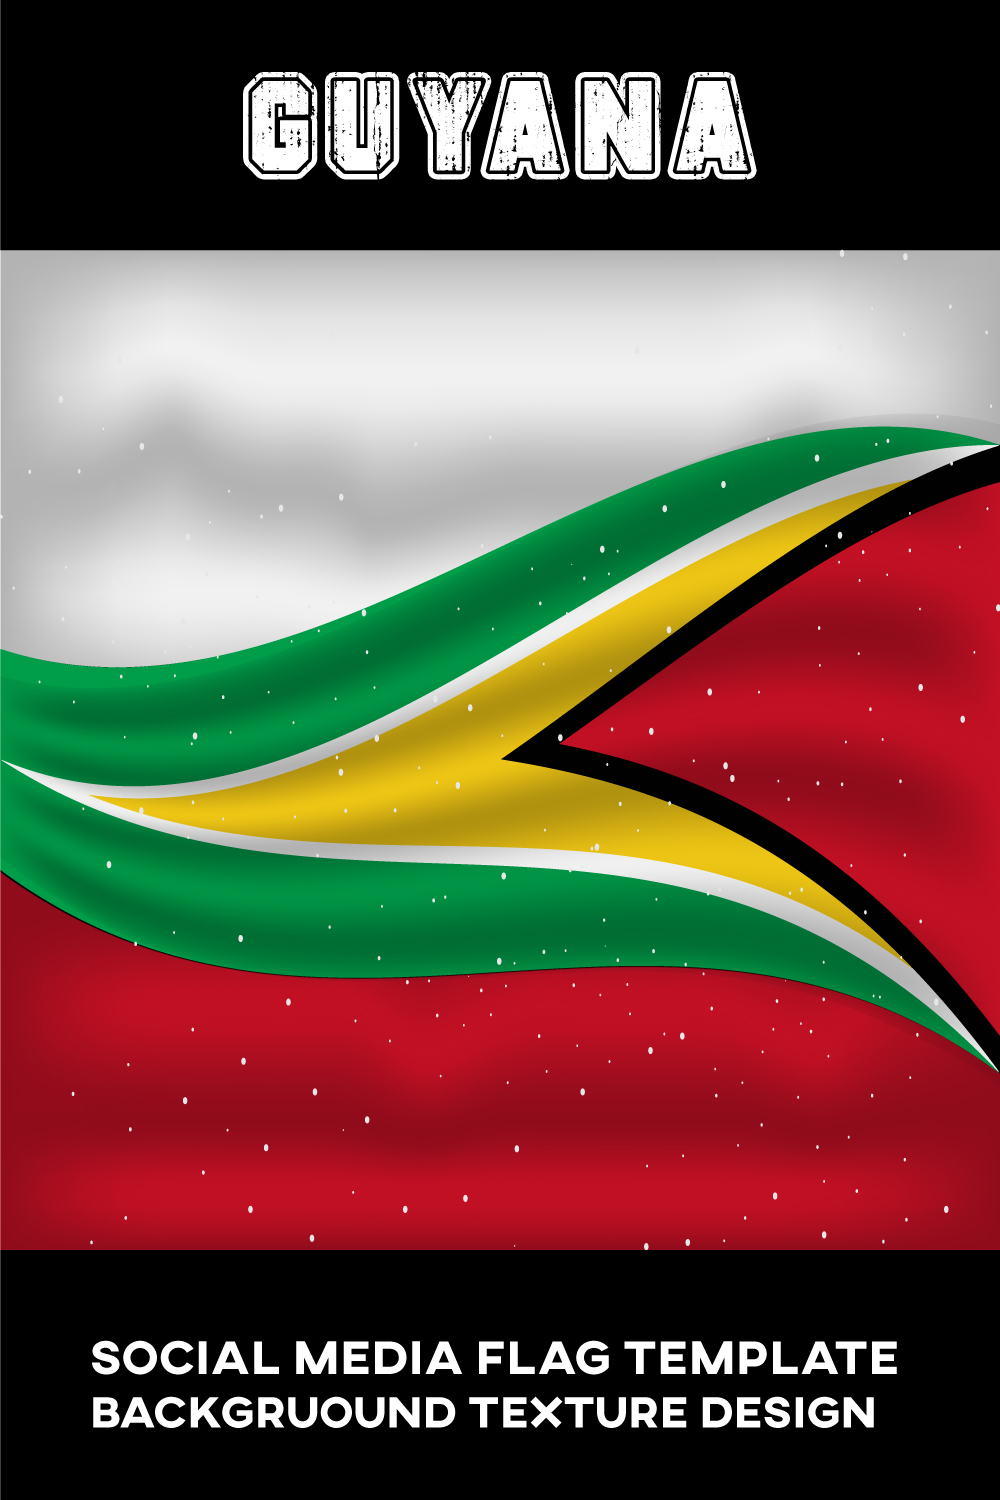 Amazing image of Guyana flag.